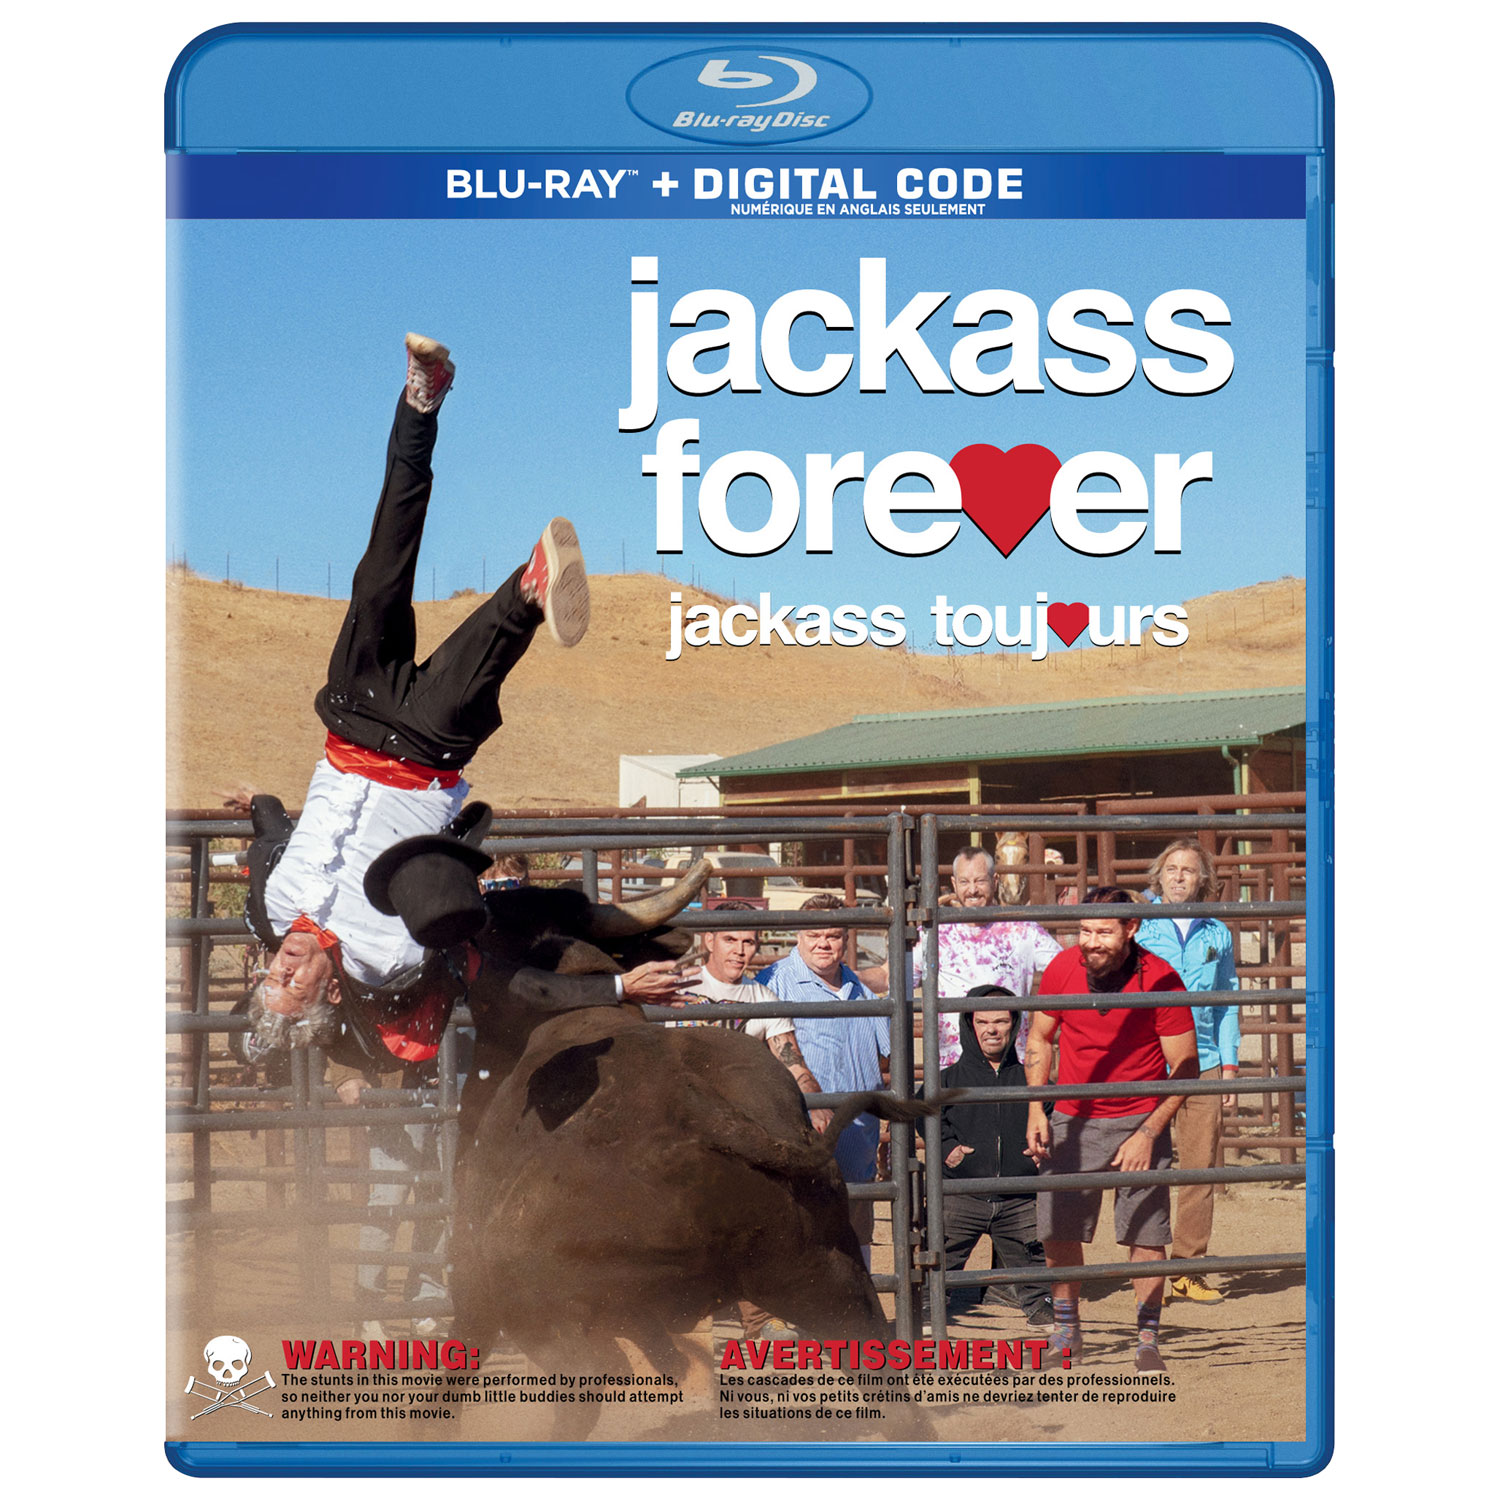 jackass 2 movie online free